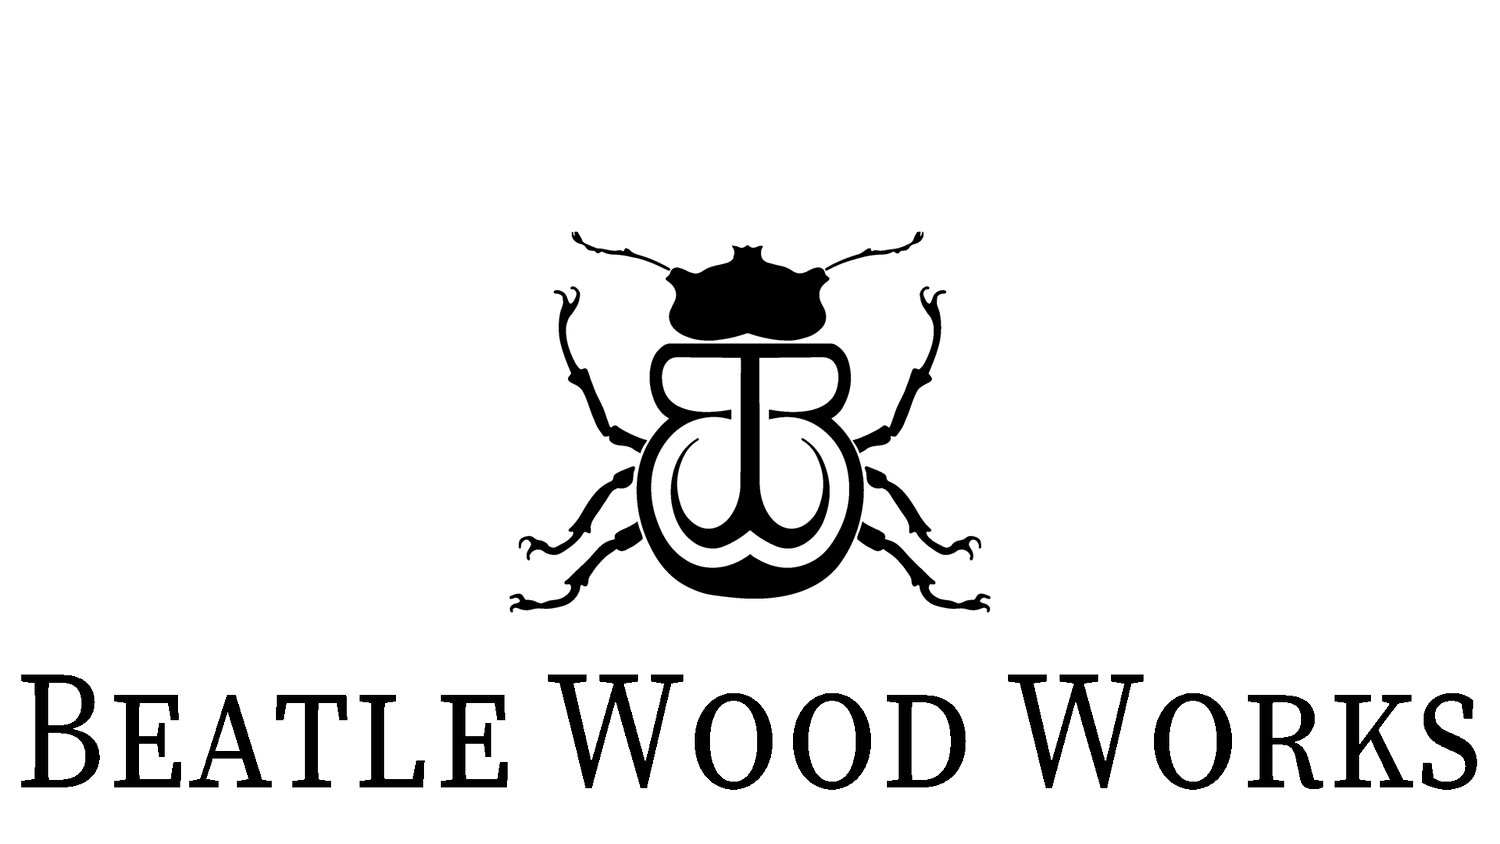 Beatle Wood Works